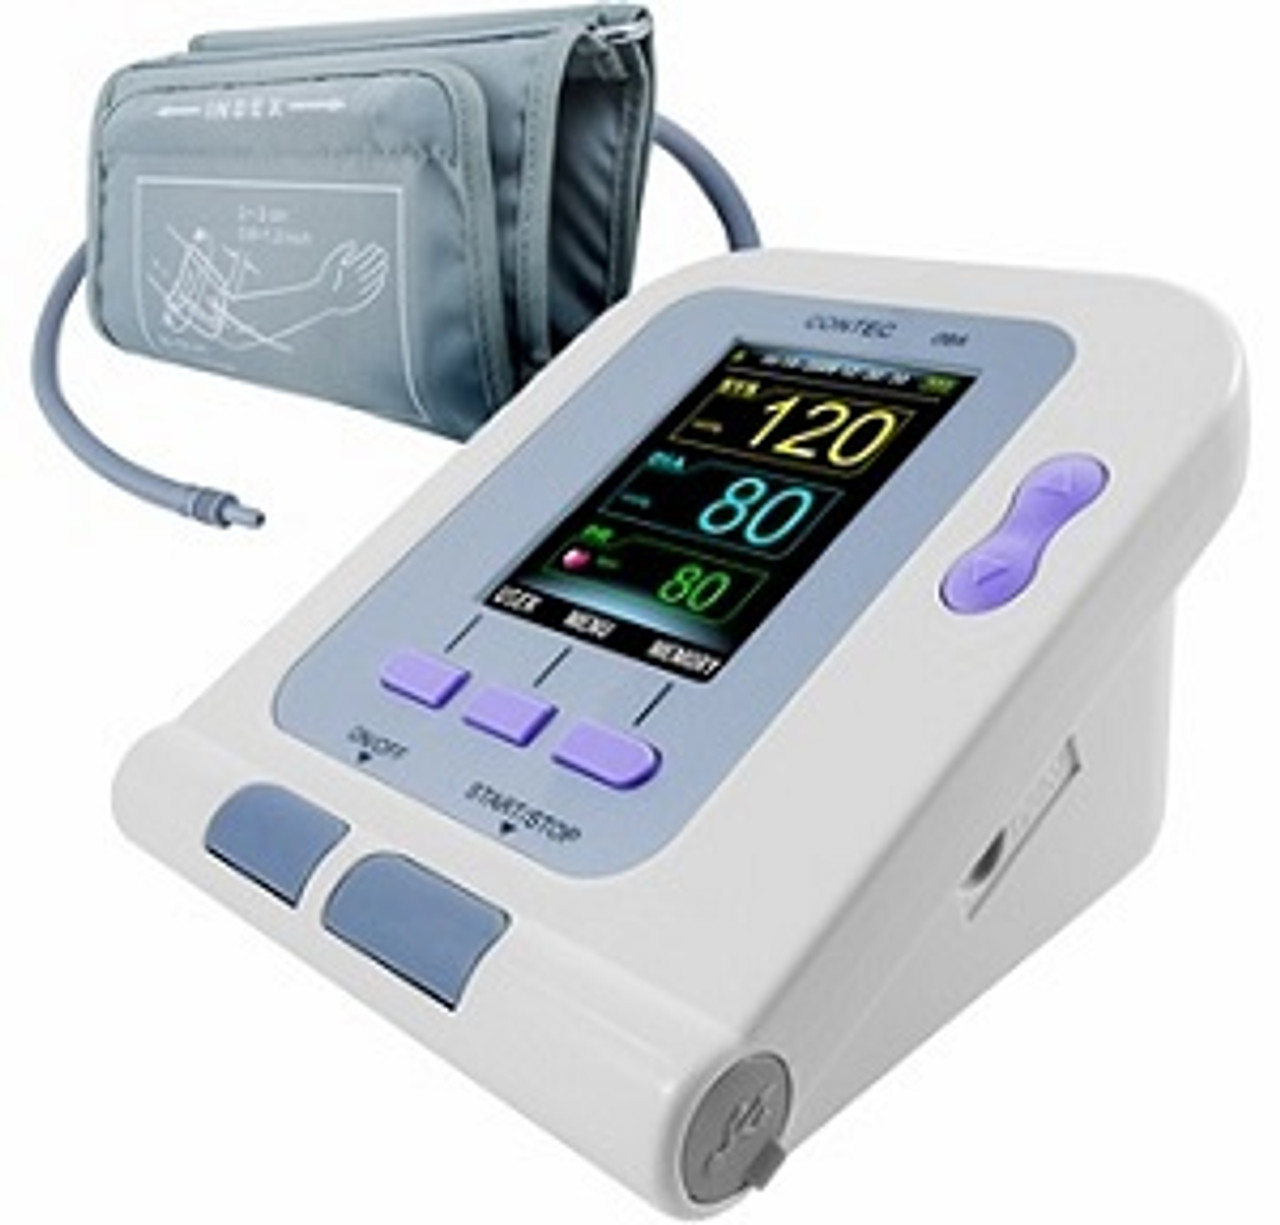 Contec 08A Blood Pressure Monitor